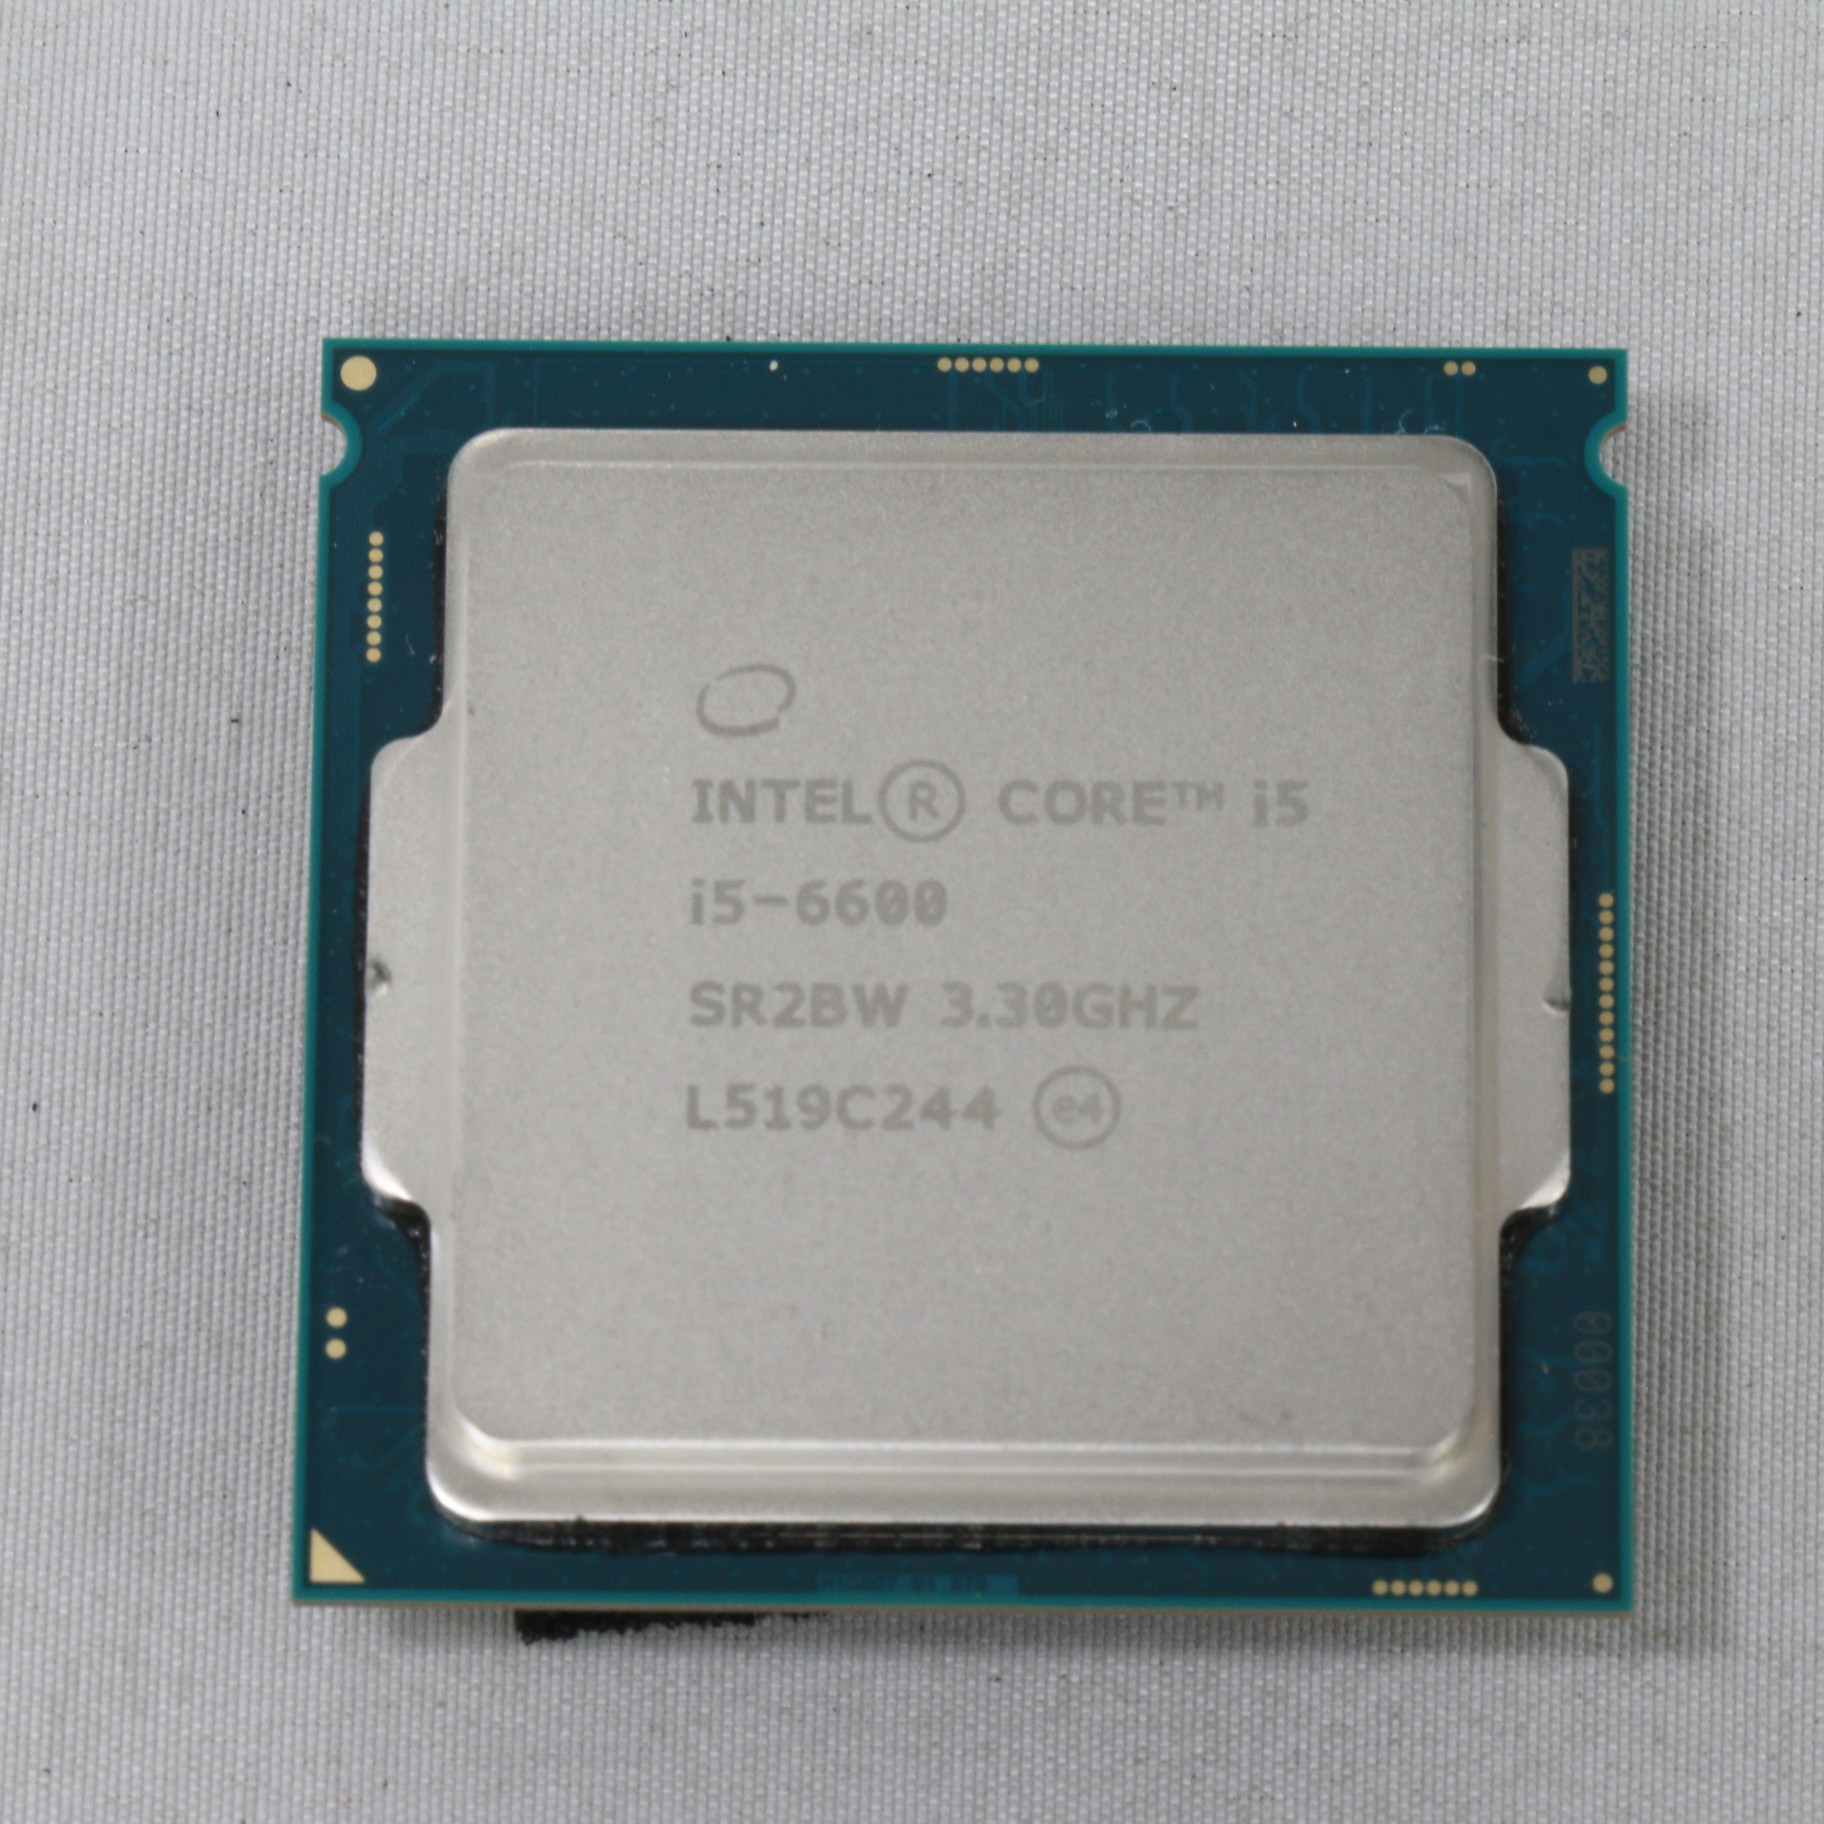 Intel Core i5 i5-6600K クアッドコア (4コア) 3.50 GHz プロセッサー 